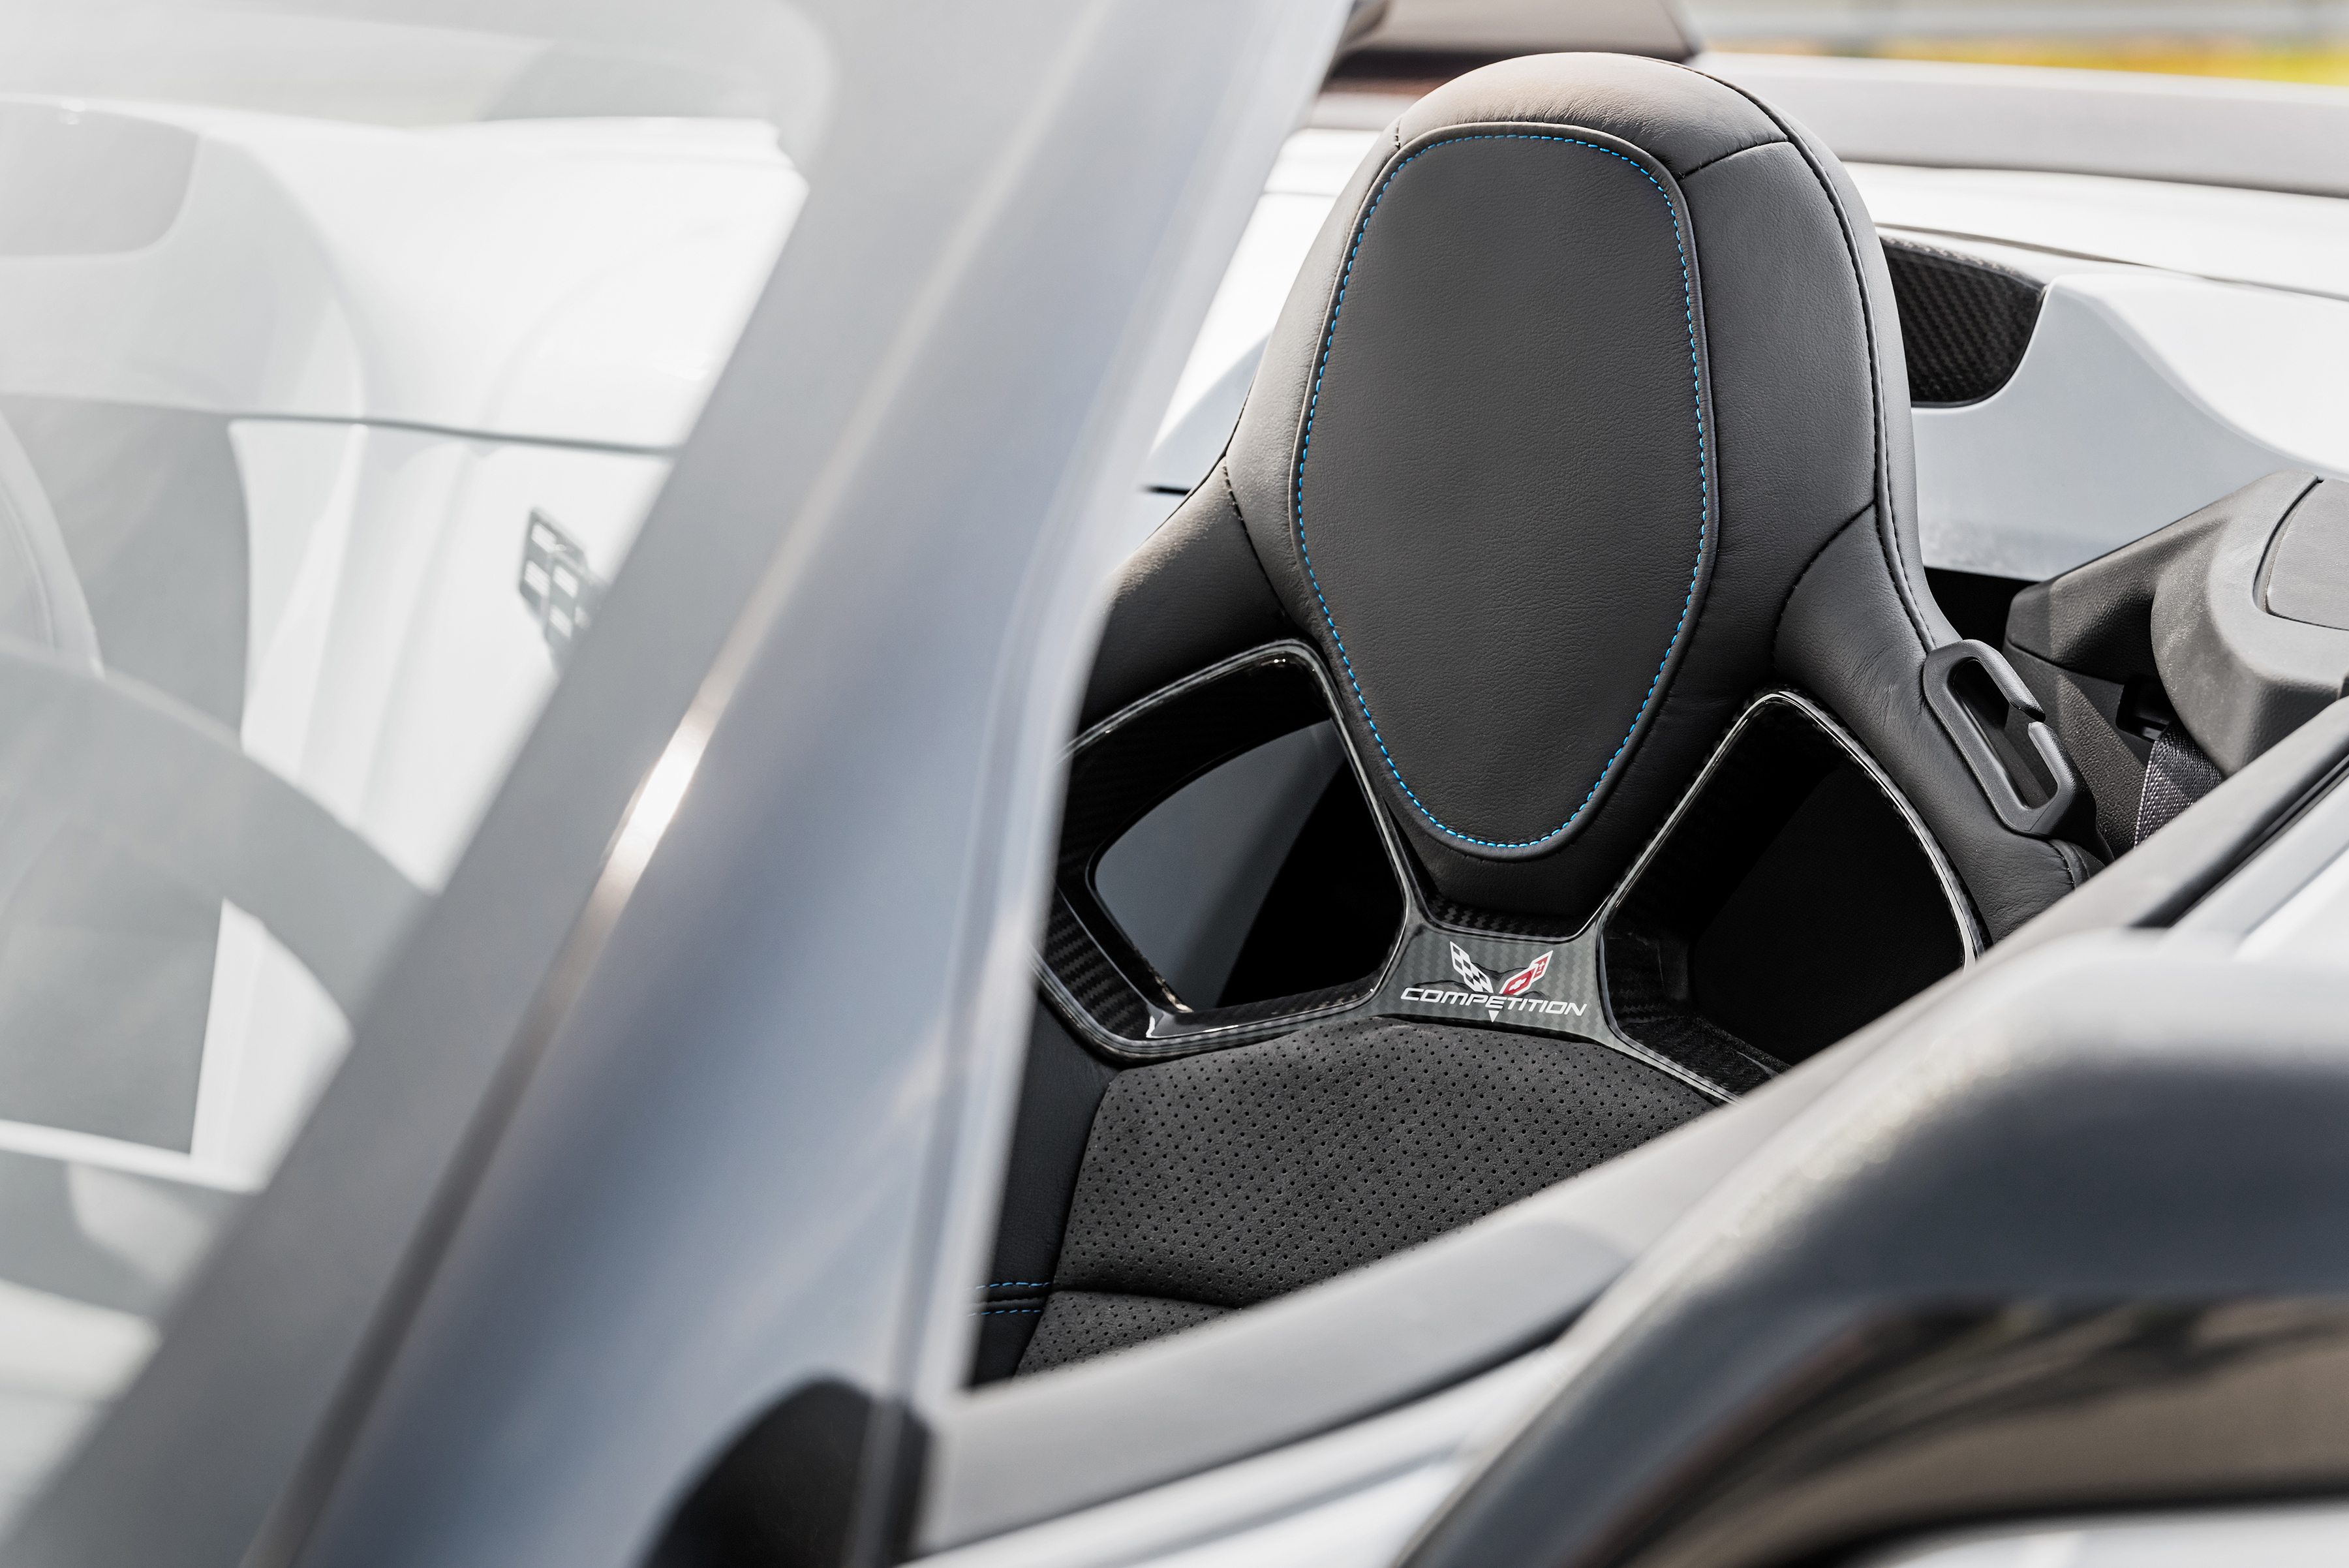 2018 Carbon 65 Edition Corvette Interior account for some of Corvette Sales in 2018